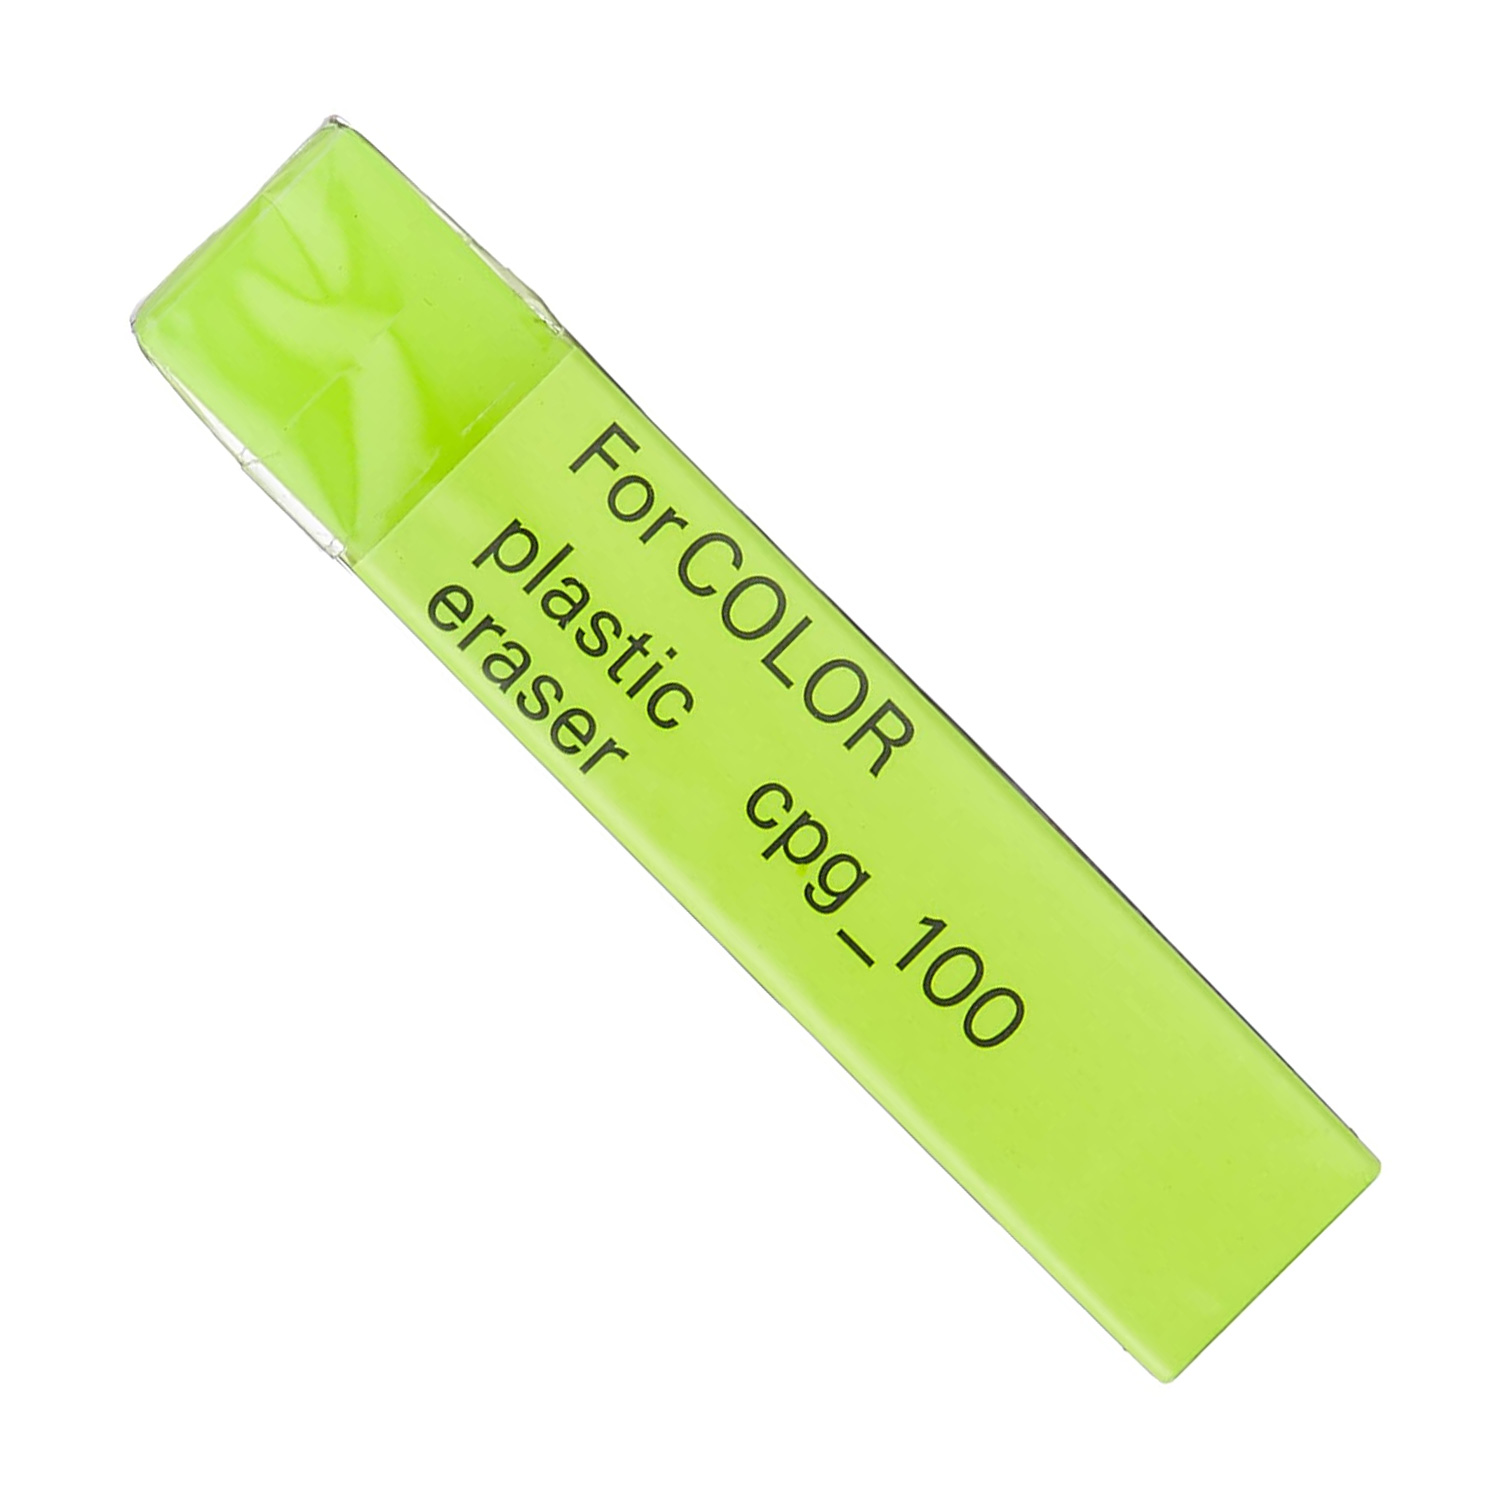 EP-CPG-100 Gフォーカラー 色鉛筆用消しゴム W7×H1.5×D1.5cm イエロー (個)